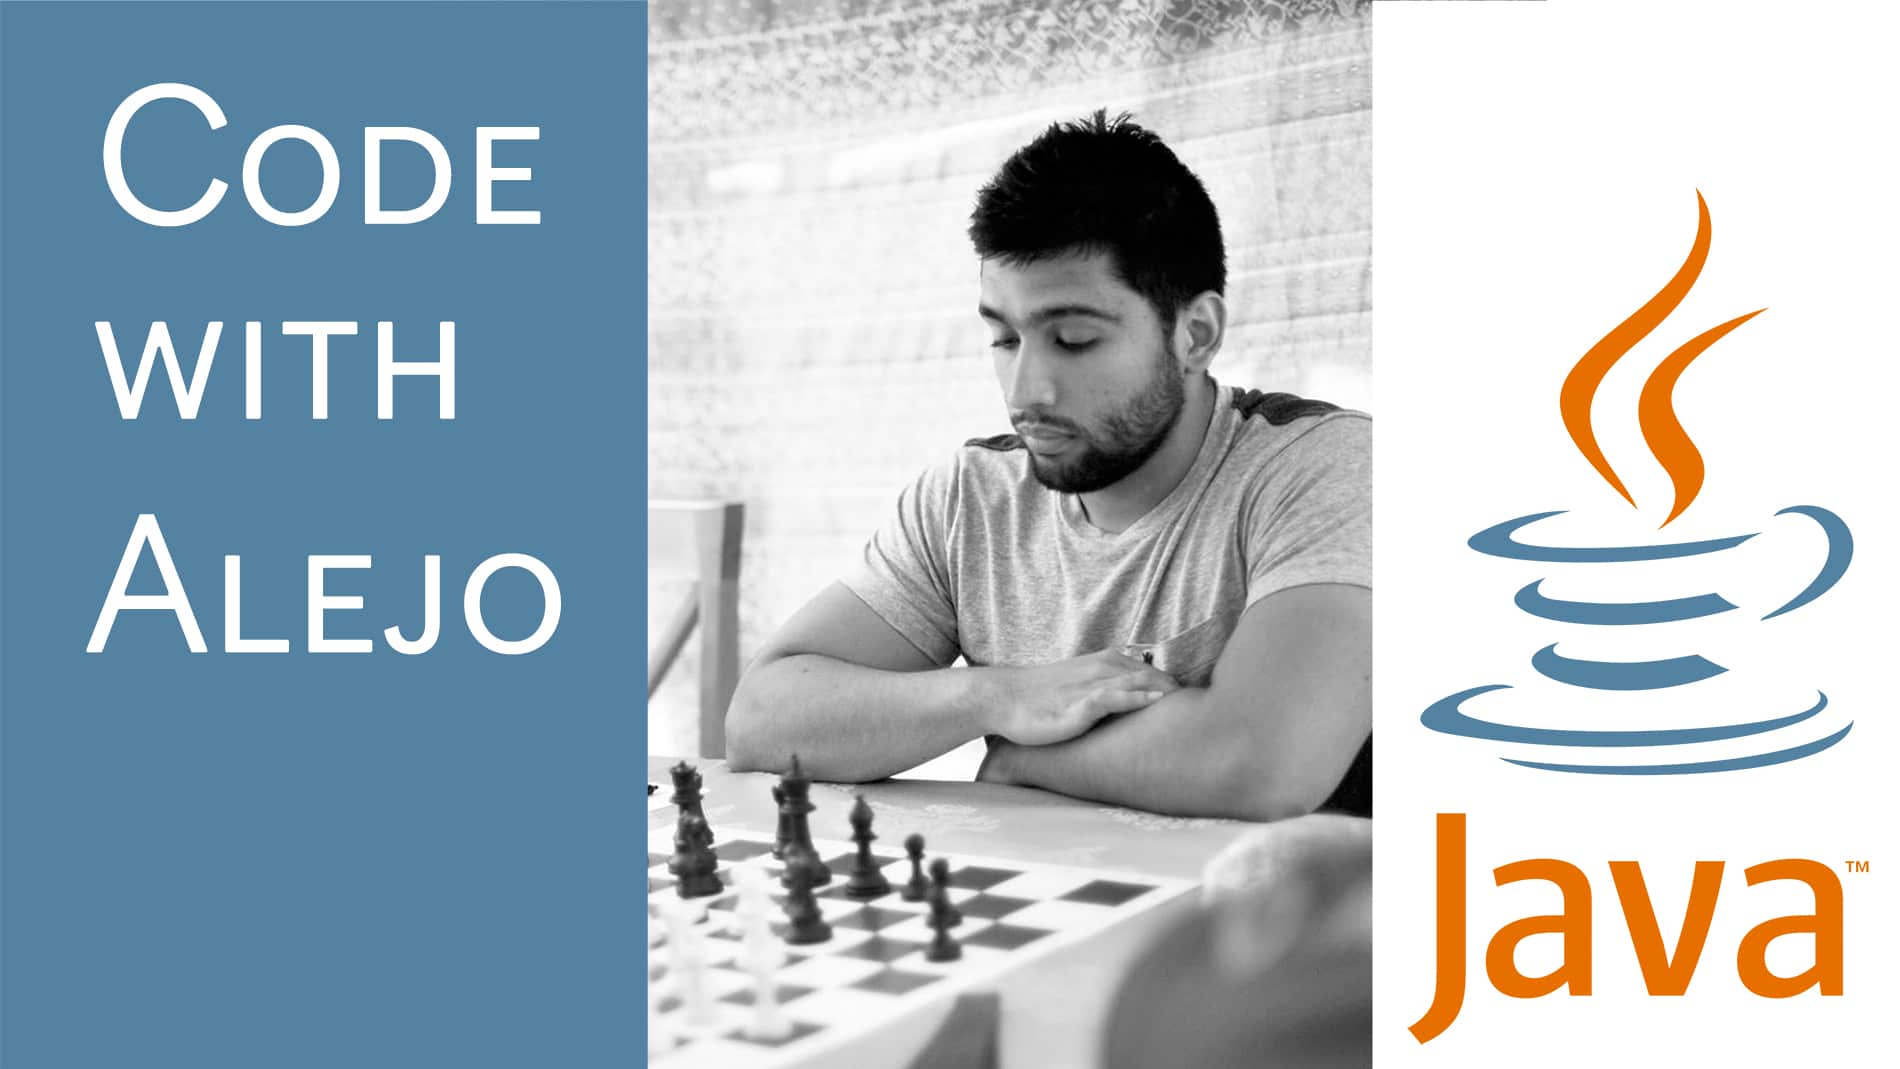 Java SDK: Code with Alejo